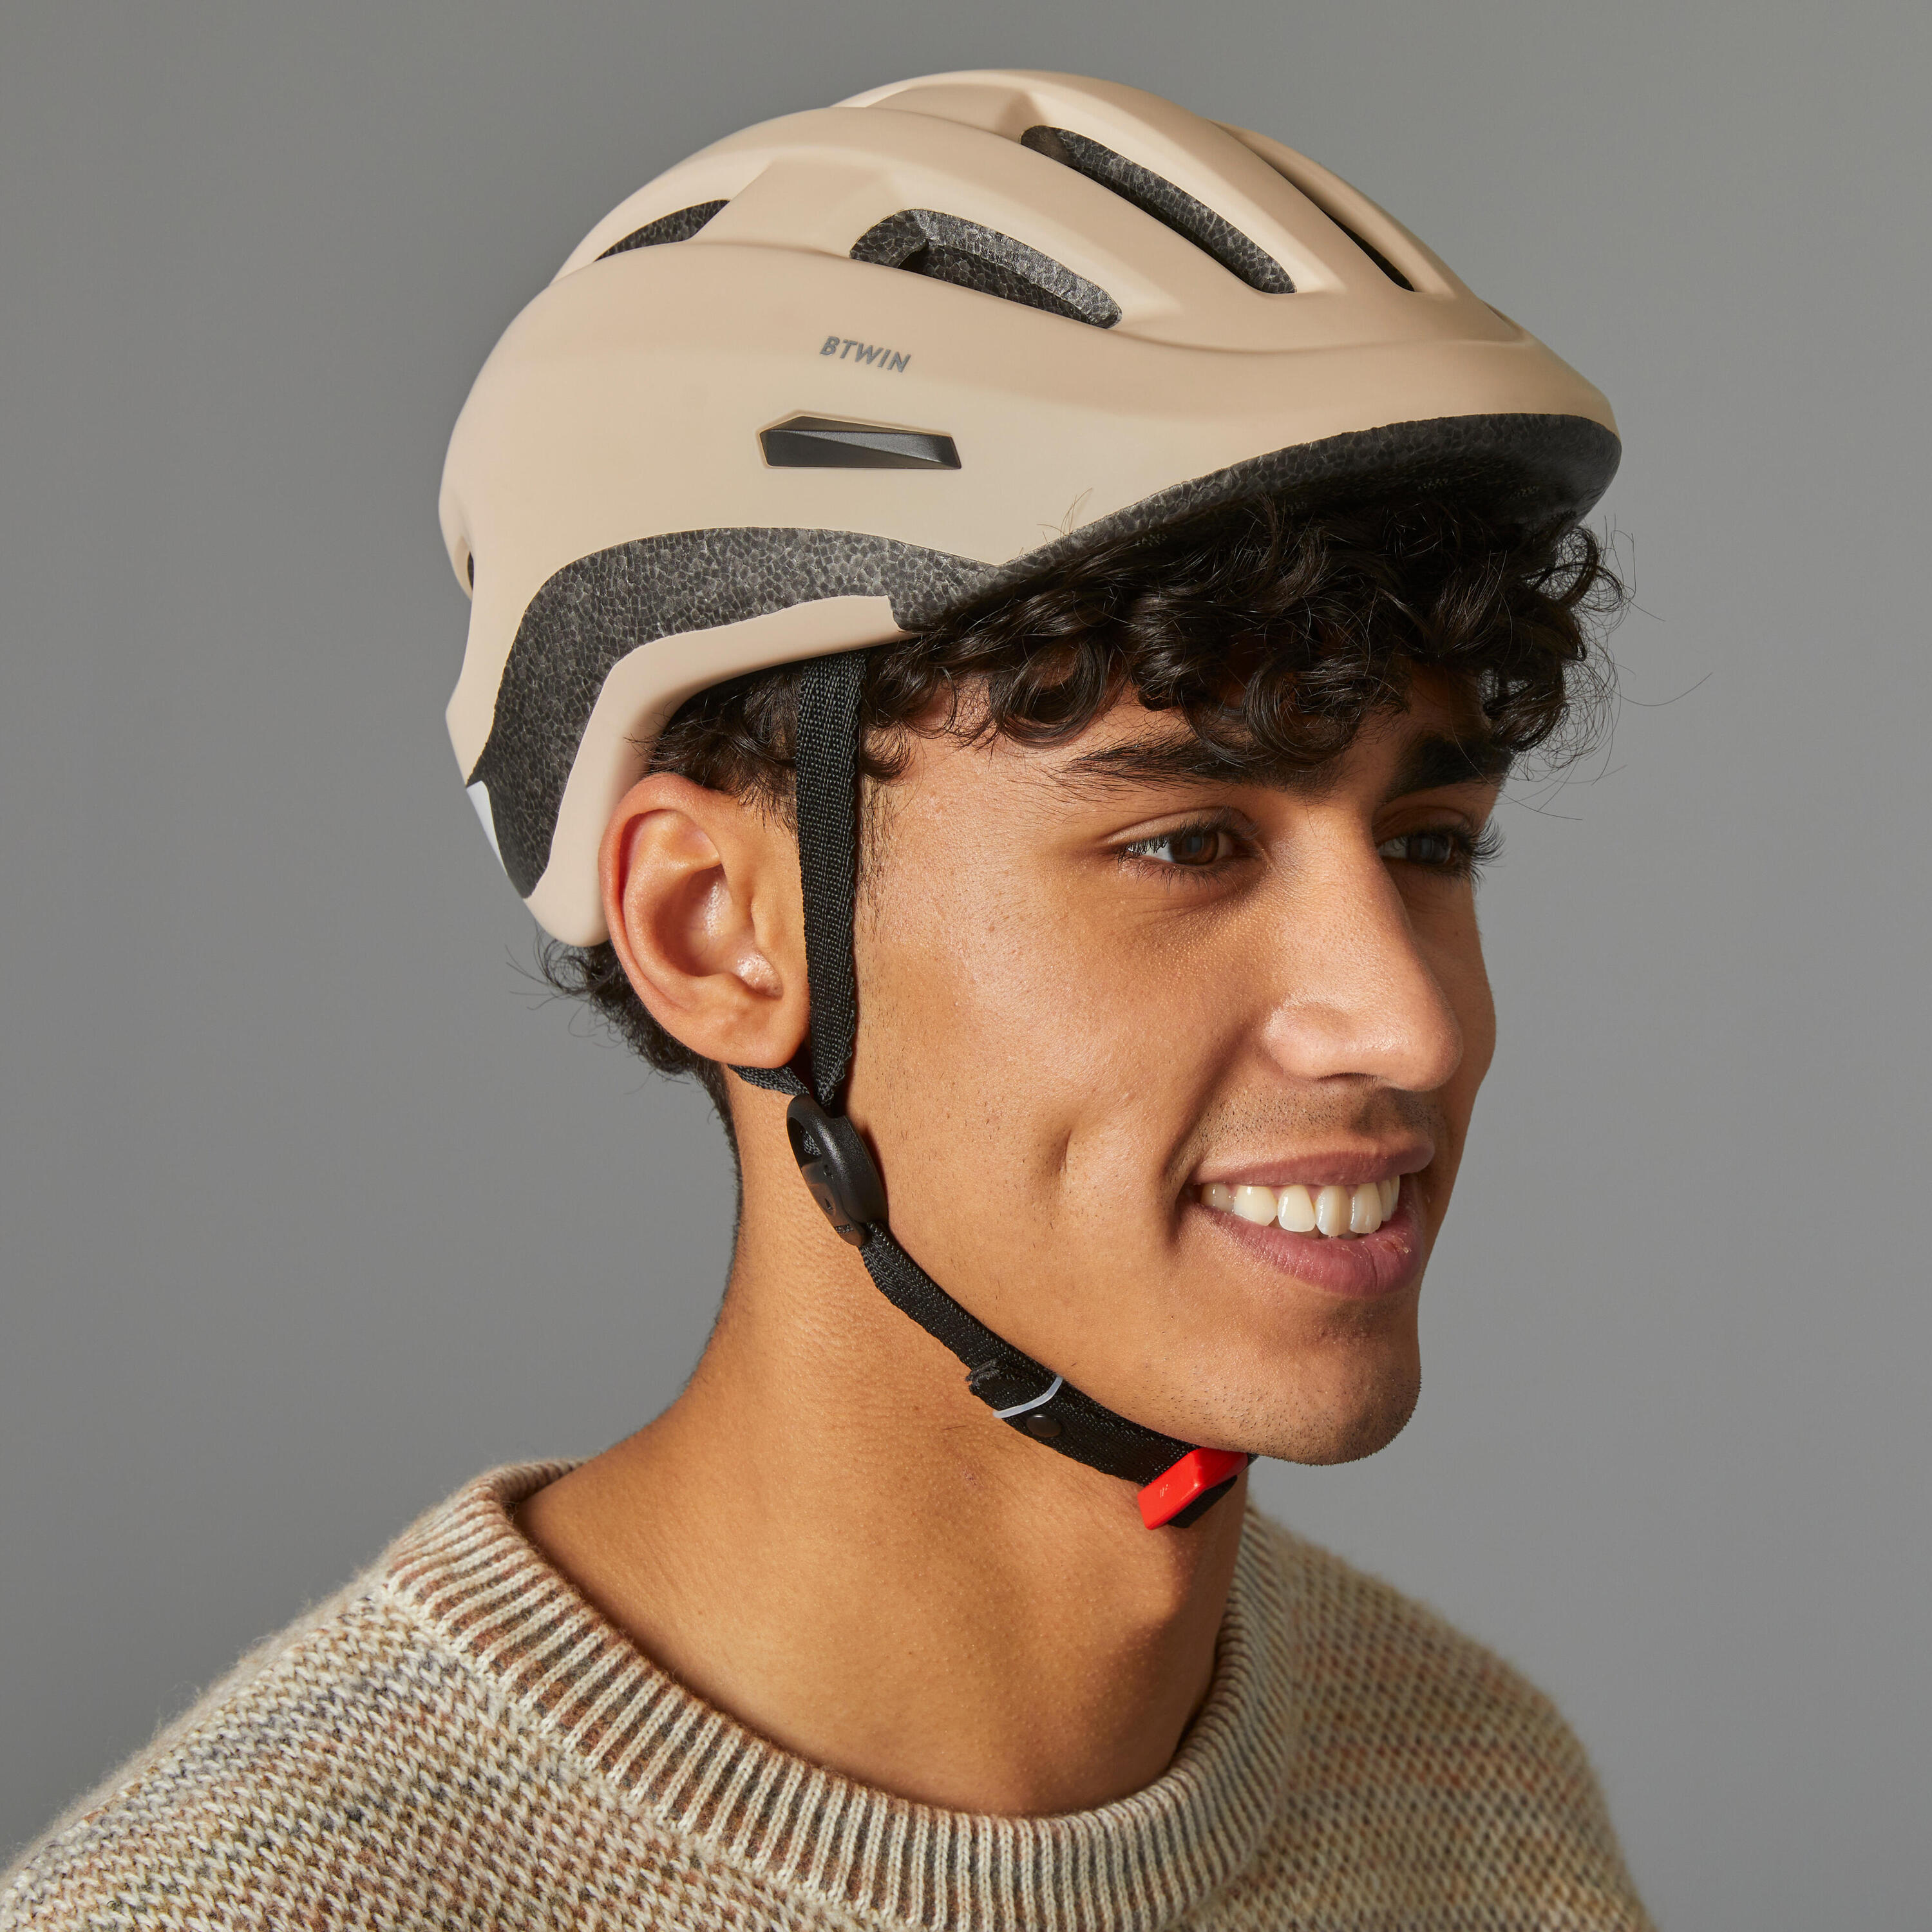 City Cycling Helmet 500 8/10